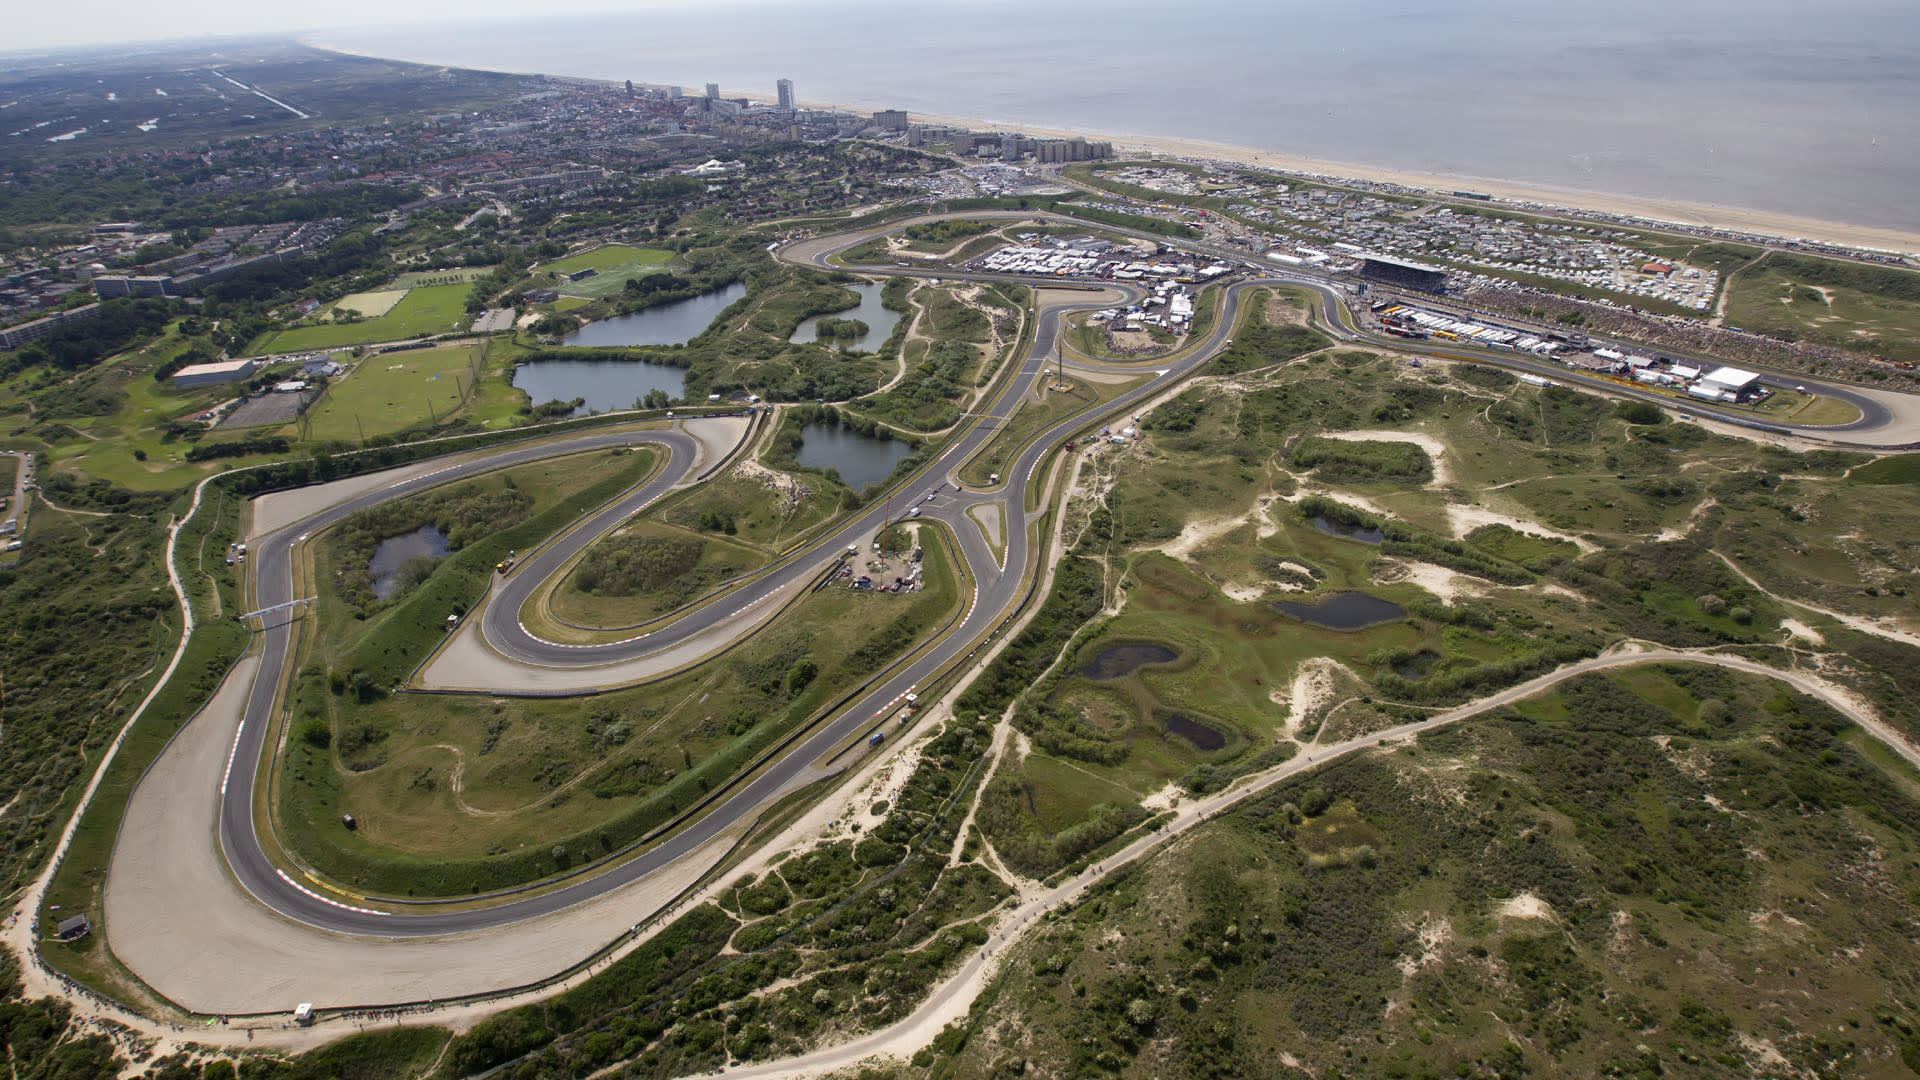 Formule 1 Zandvoort 2021 Organisers Confirm Dutch Grand Prix Will Not Be Held In 2020 Formula 1